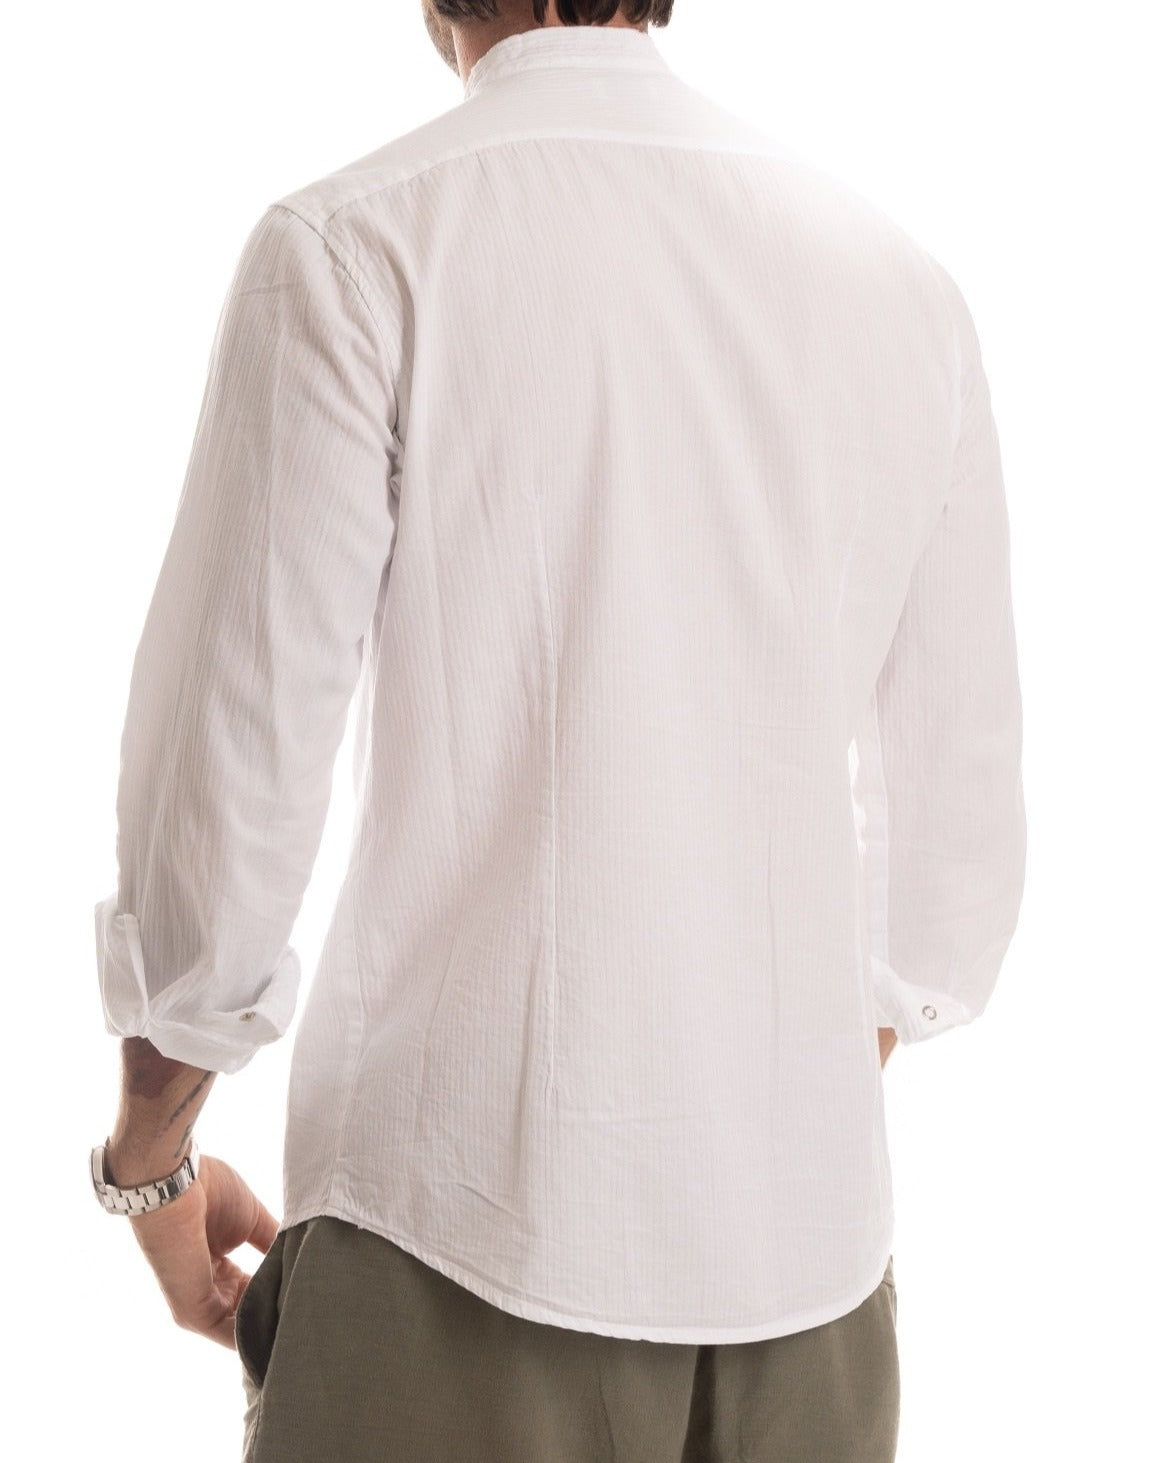 Elba - White Korean shirt with jewel buttons